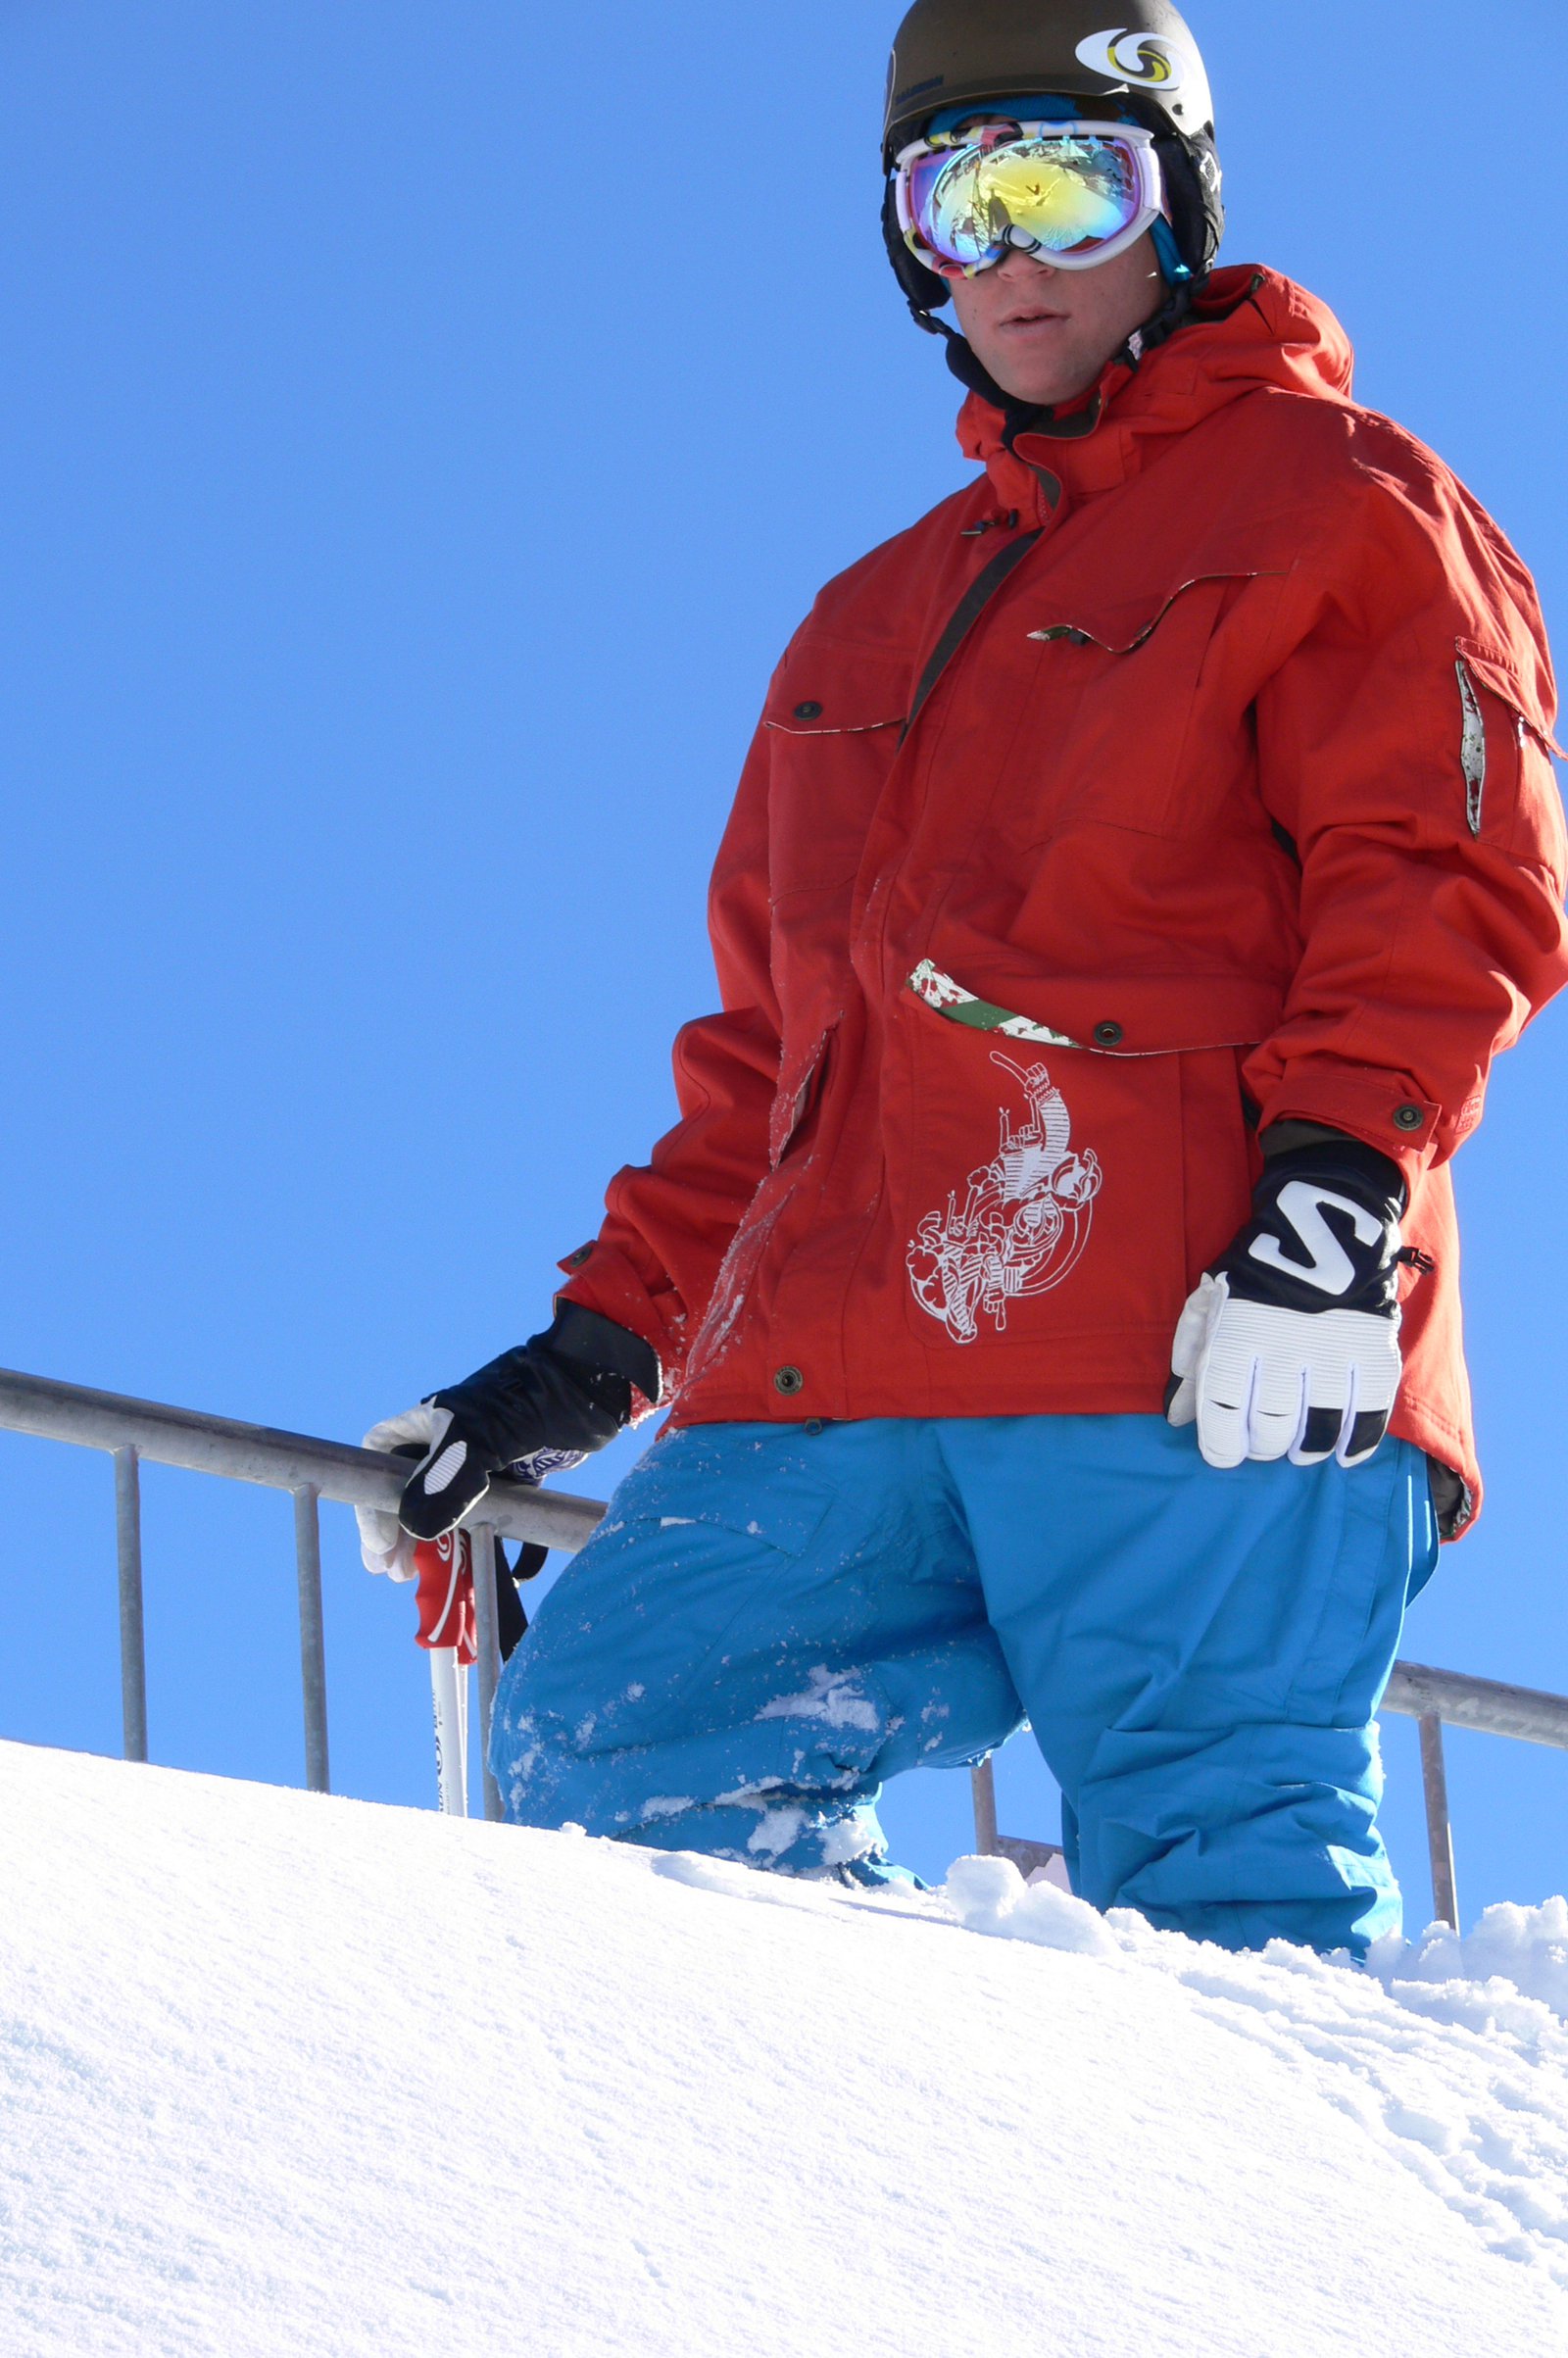 Me@Skiing